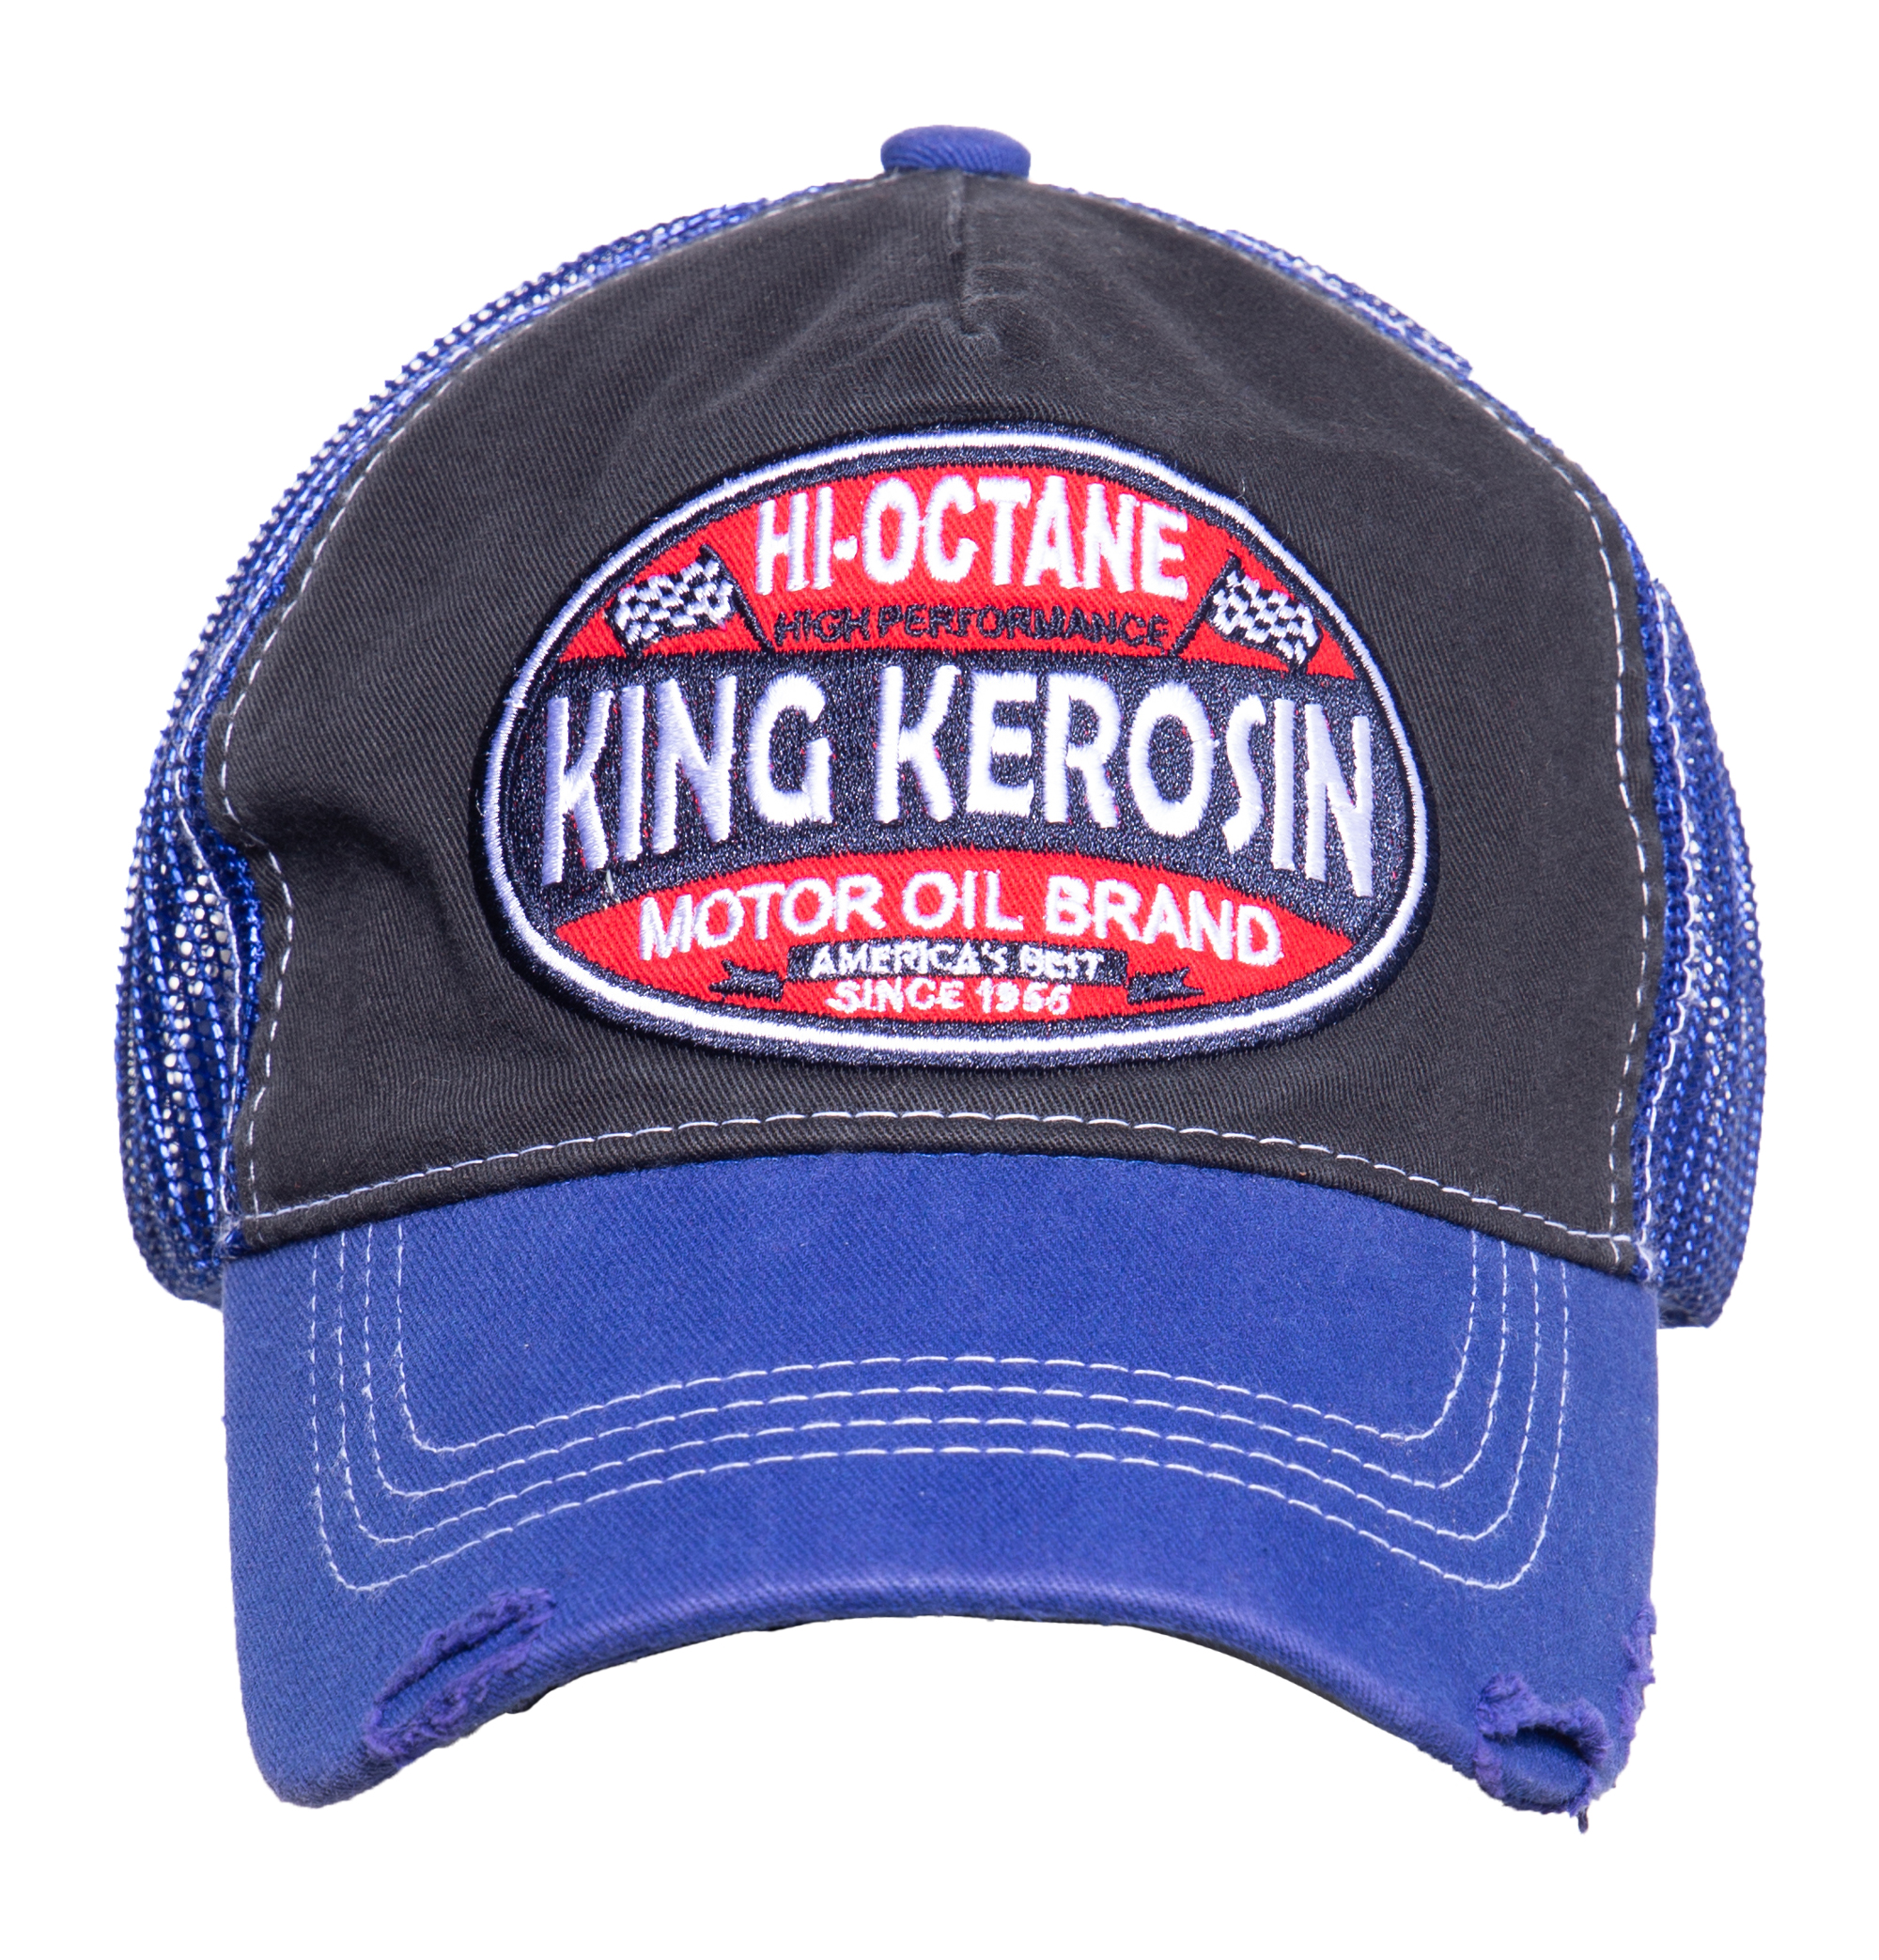 King Kerosin Trucker Cap im Used-Look - Hi-Octane